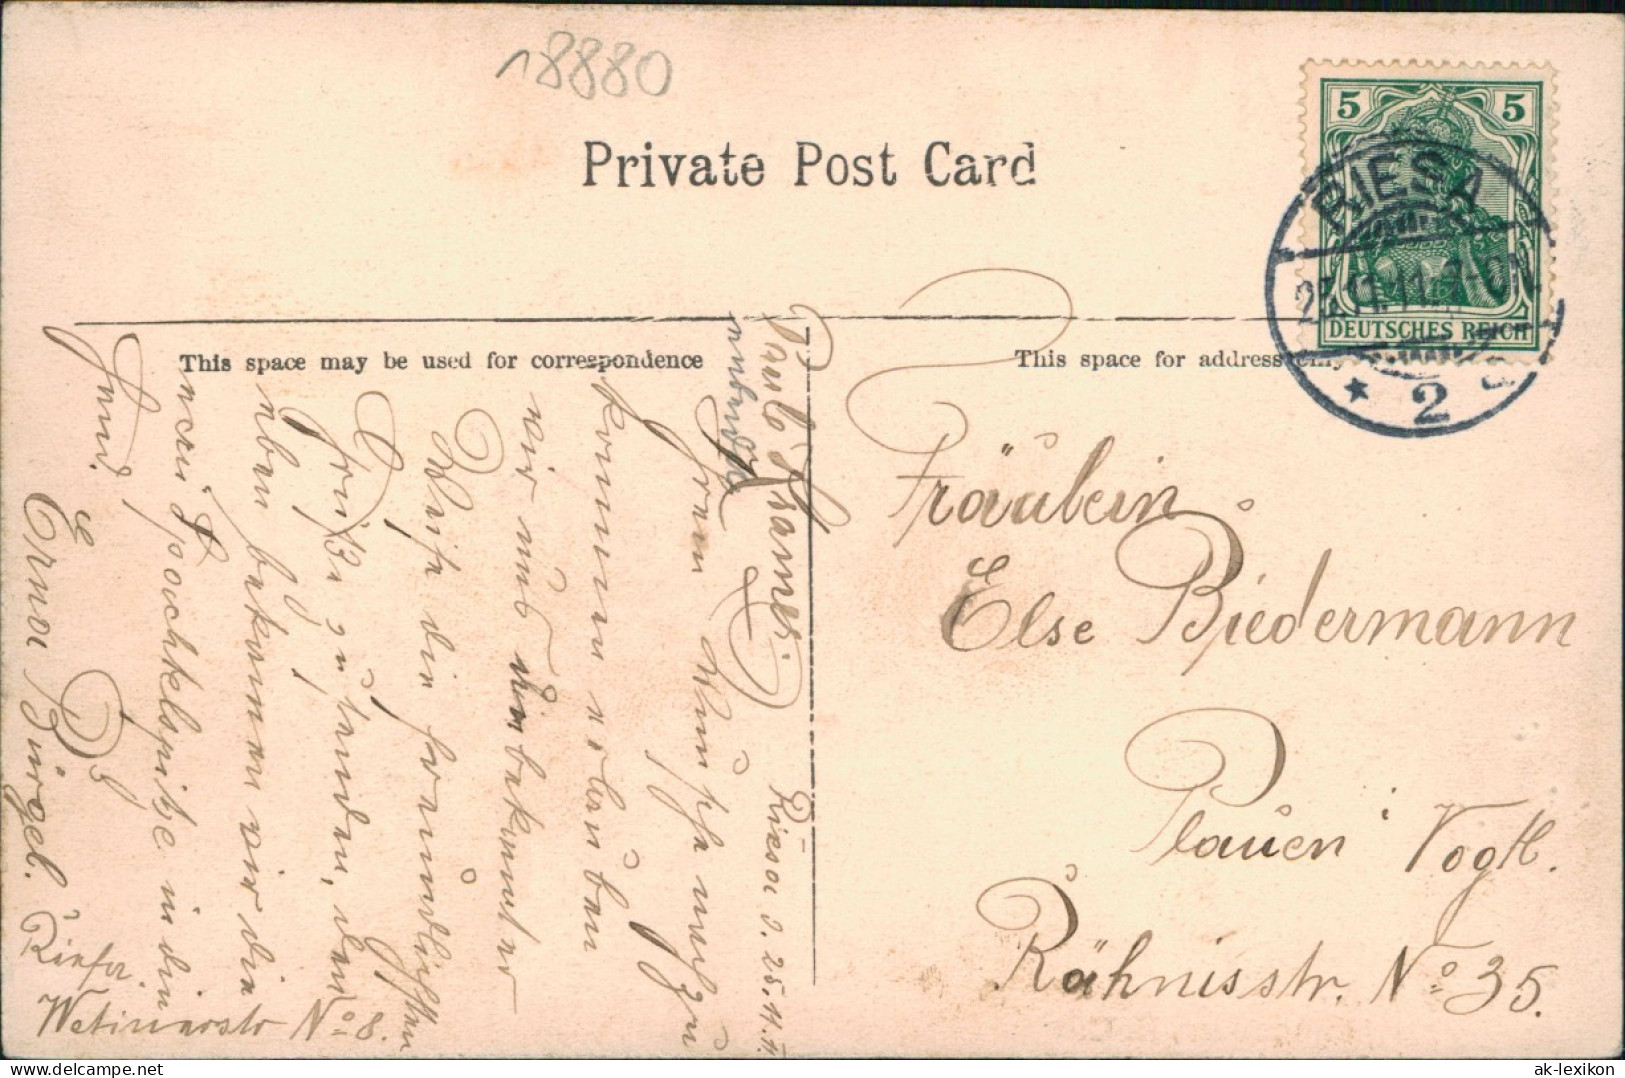 Postcard Vancouver Stanley Park, B. C. "A Shady Spot", 1911 - Vancouver